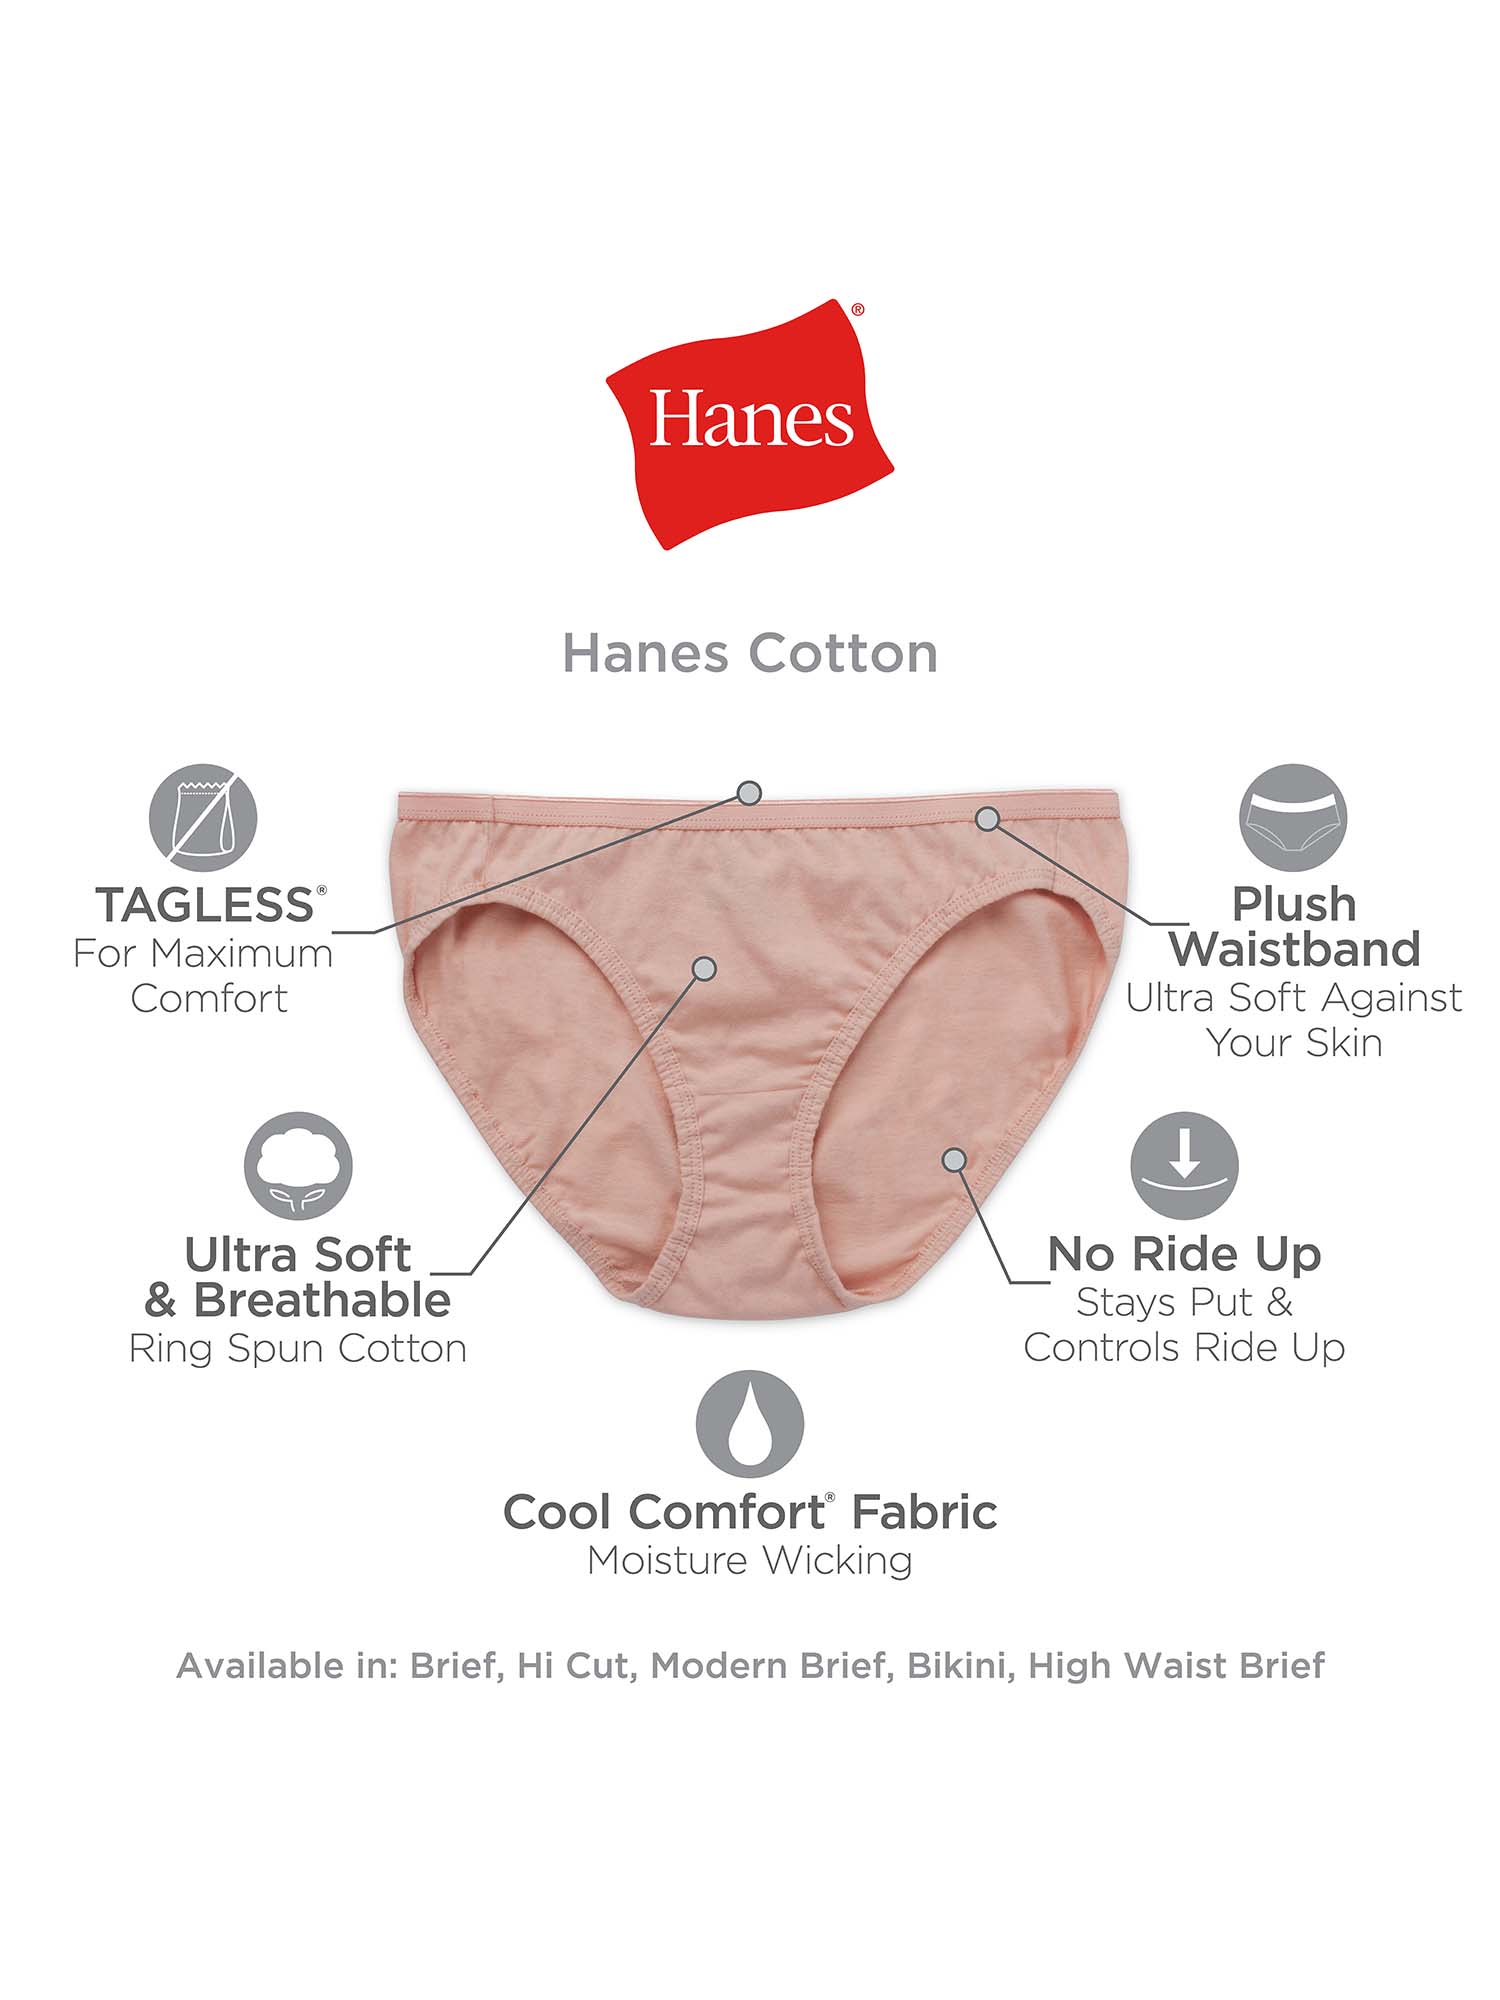 Hanes Women's Cotton Bikini Underwear, 6-Pack - image 5 of 7